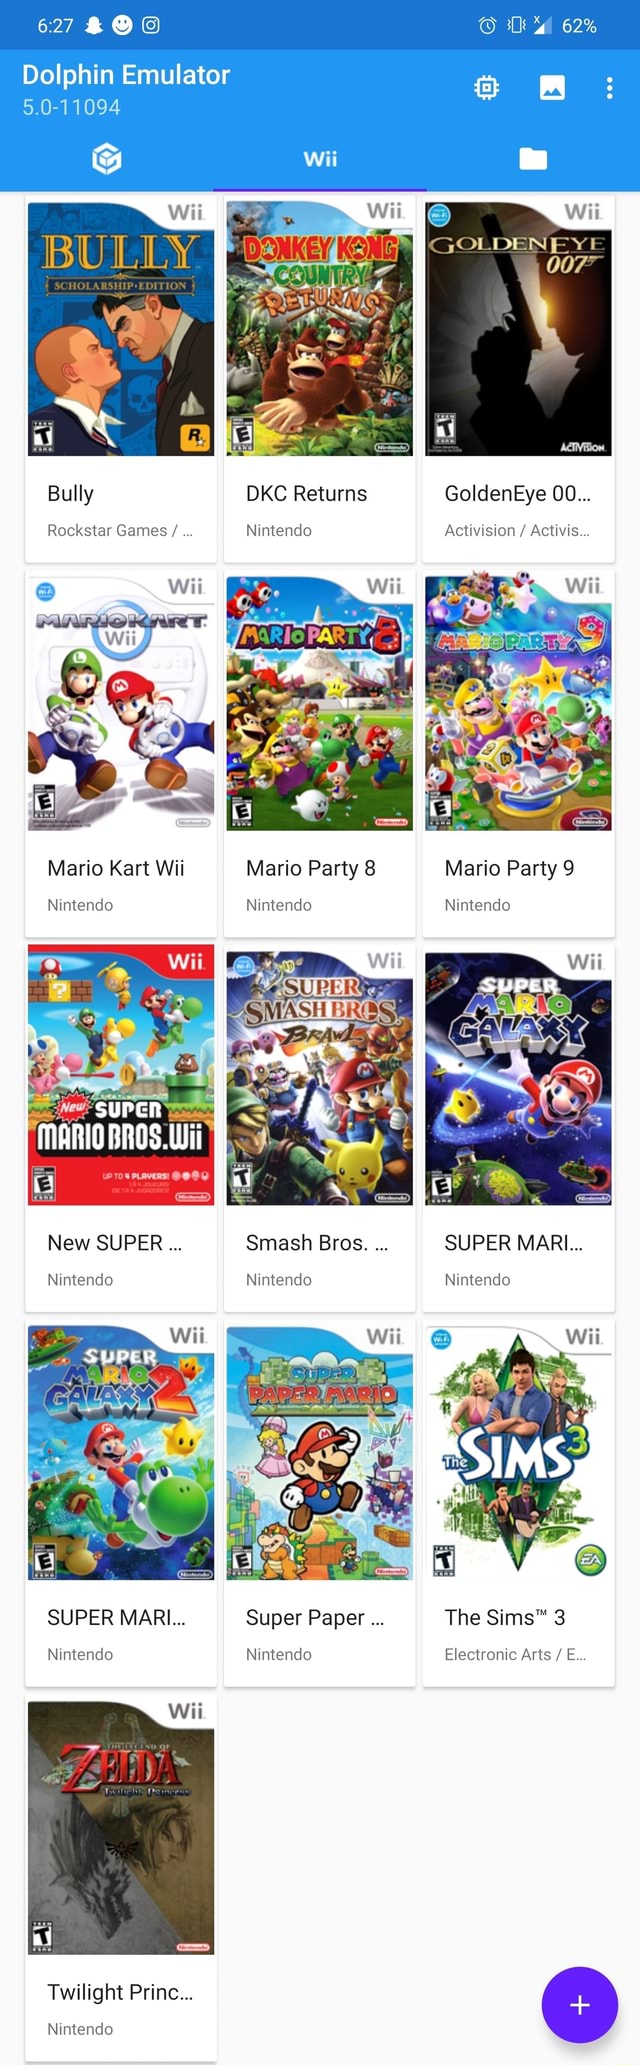 Mario Party 9 Dolphin Emulator